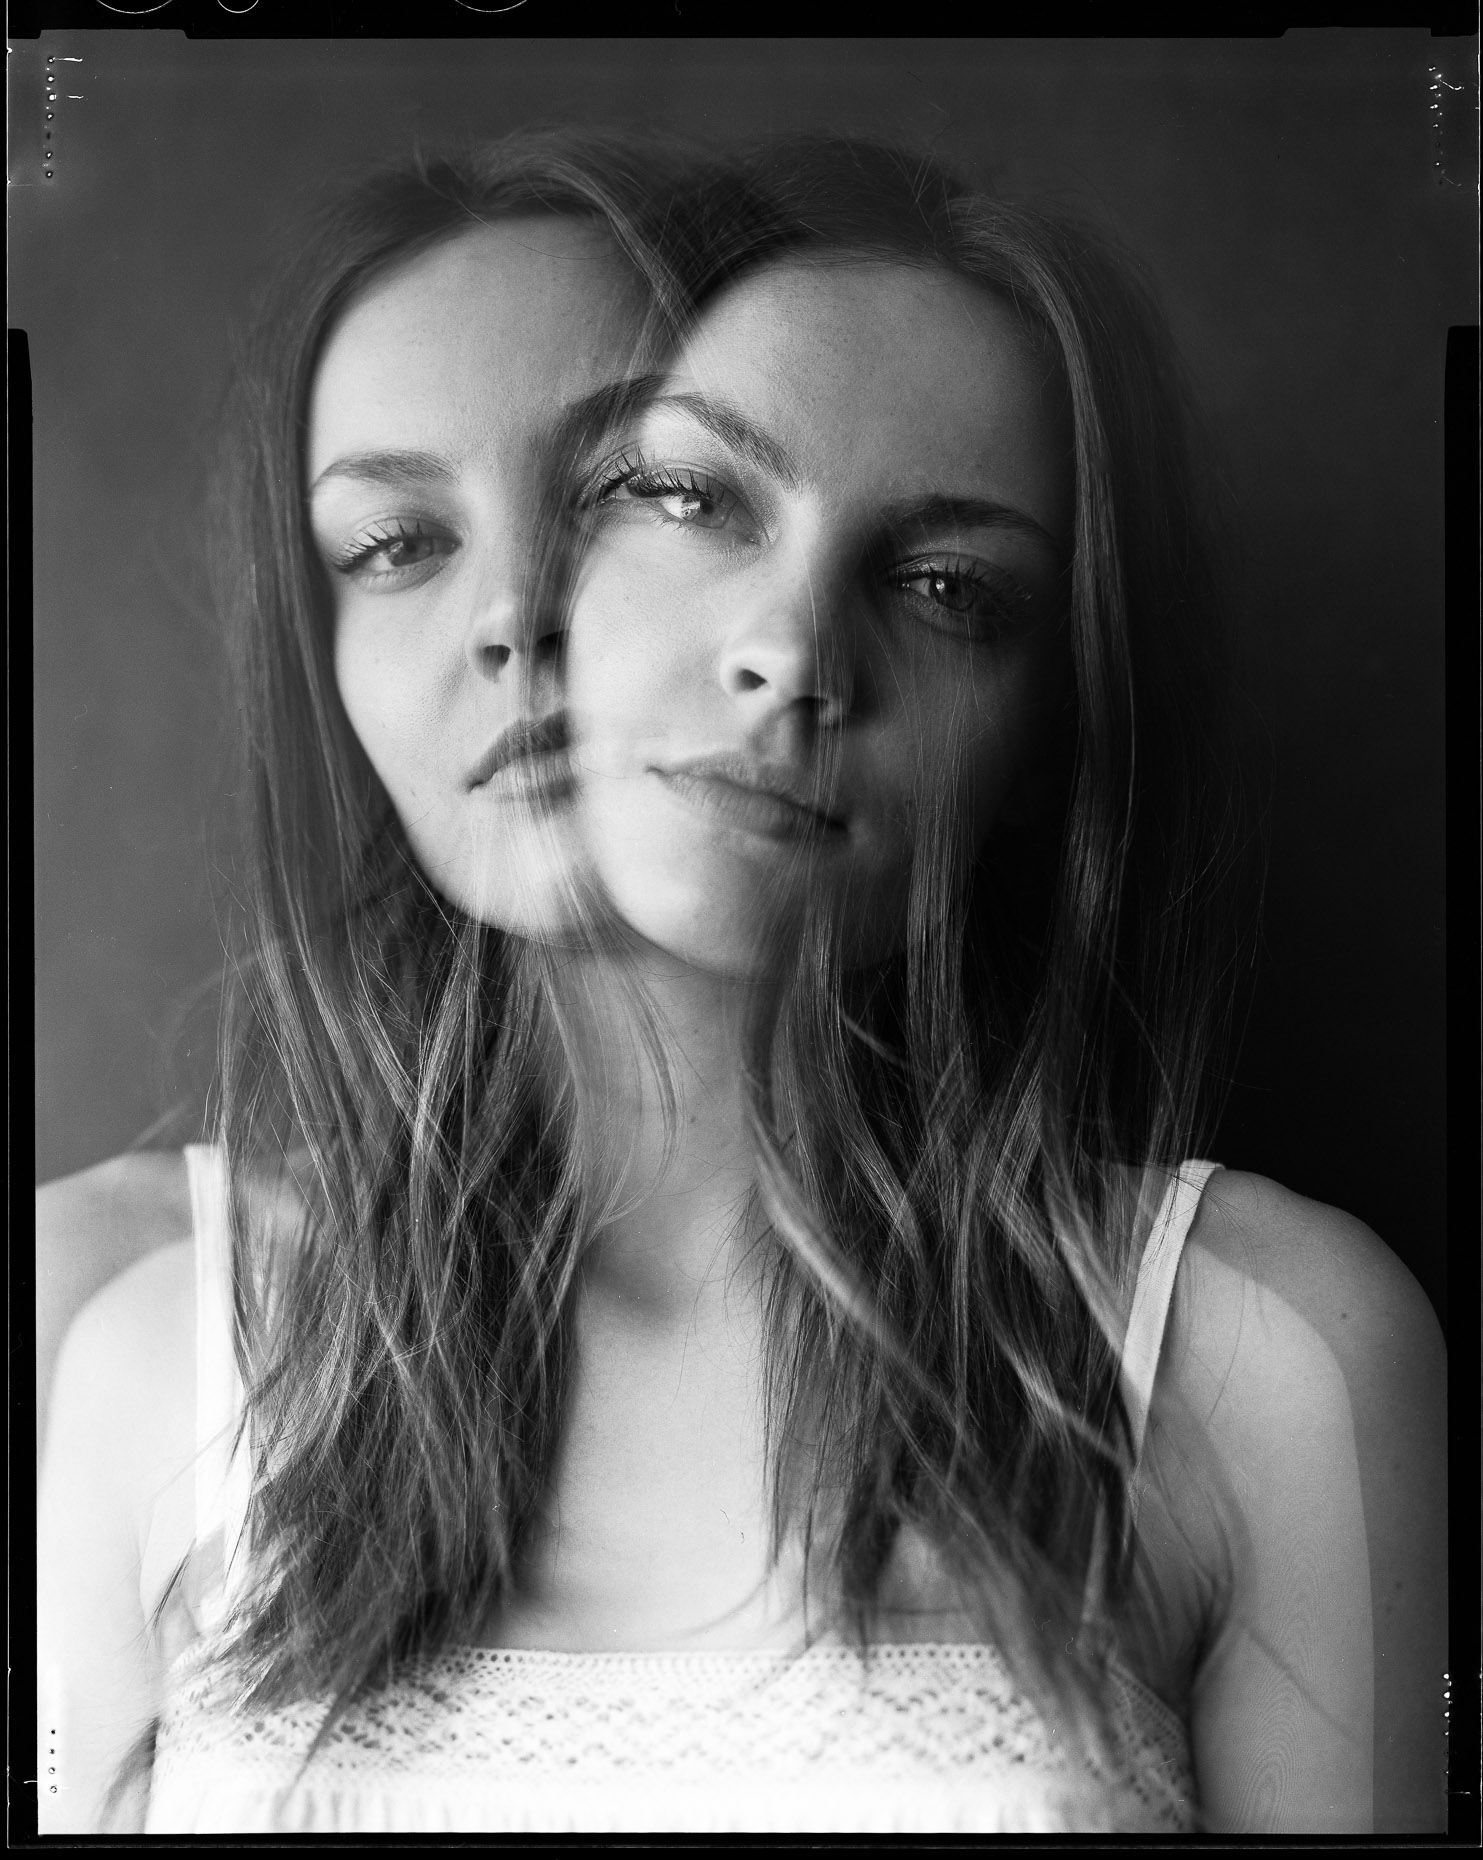 Double exposure portrait of model Sam Robinson by Shane O